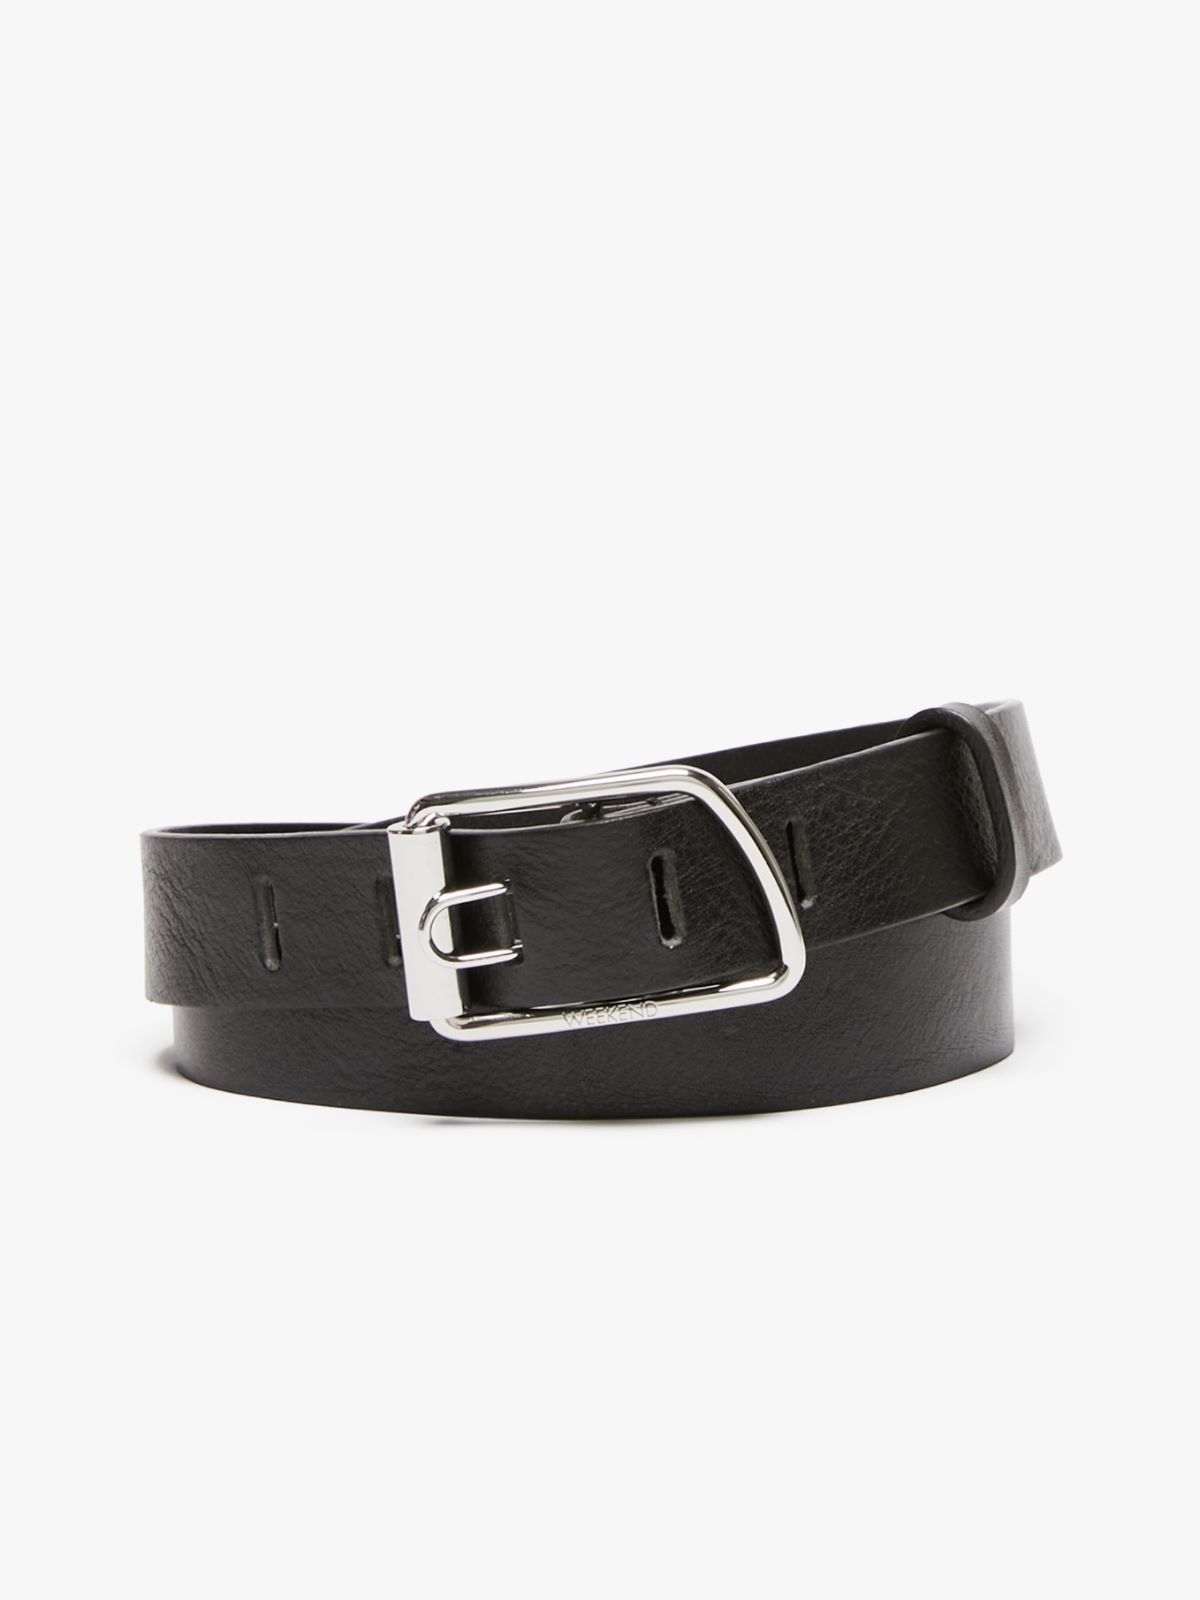 Leather belt - BLACK - Weekend Max Mara